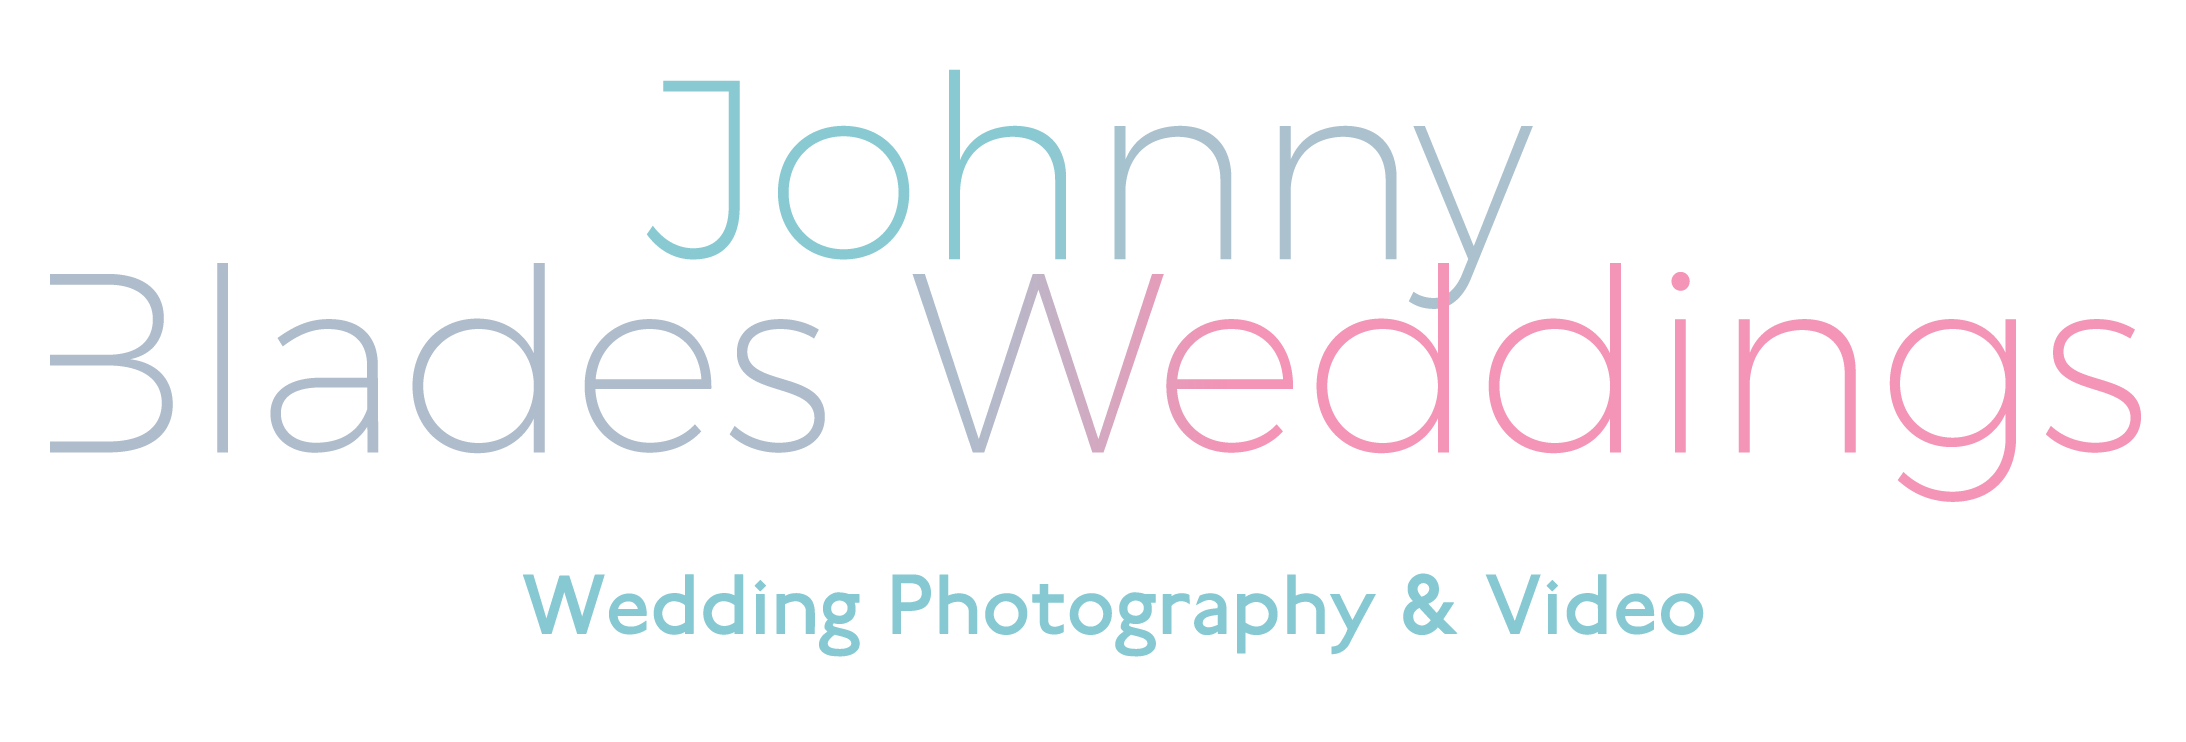 Johnny blades wedding photography & video.